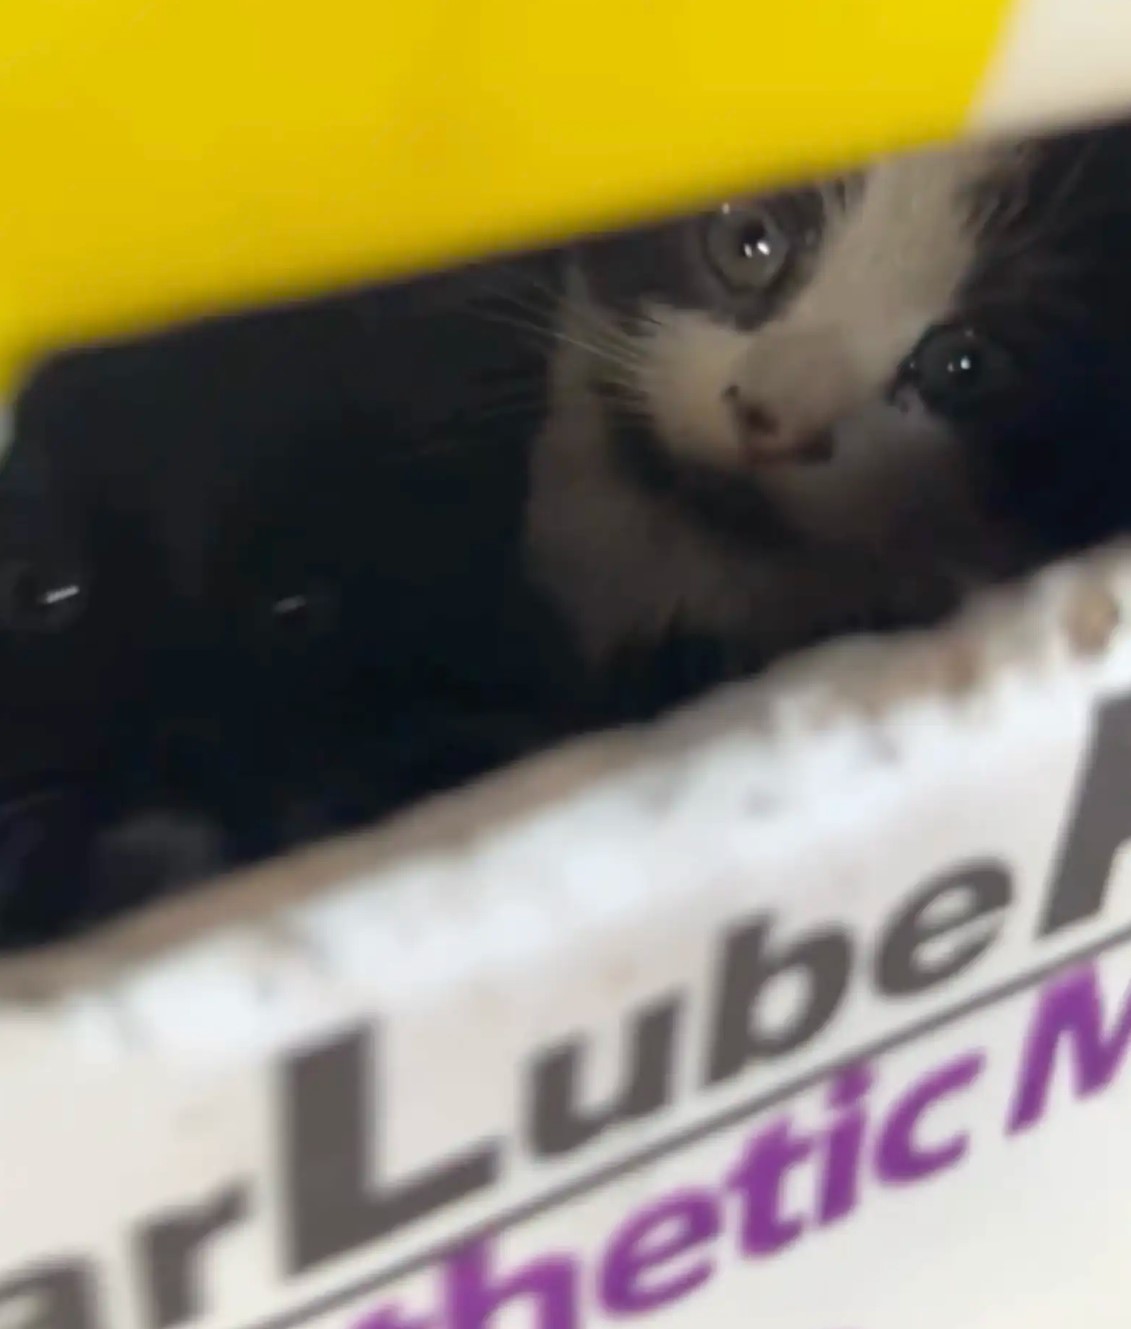 cat peeking from the box